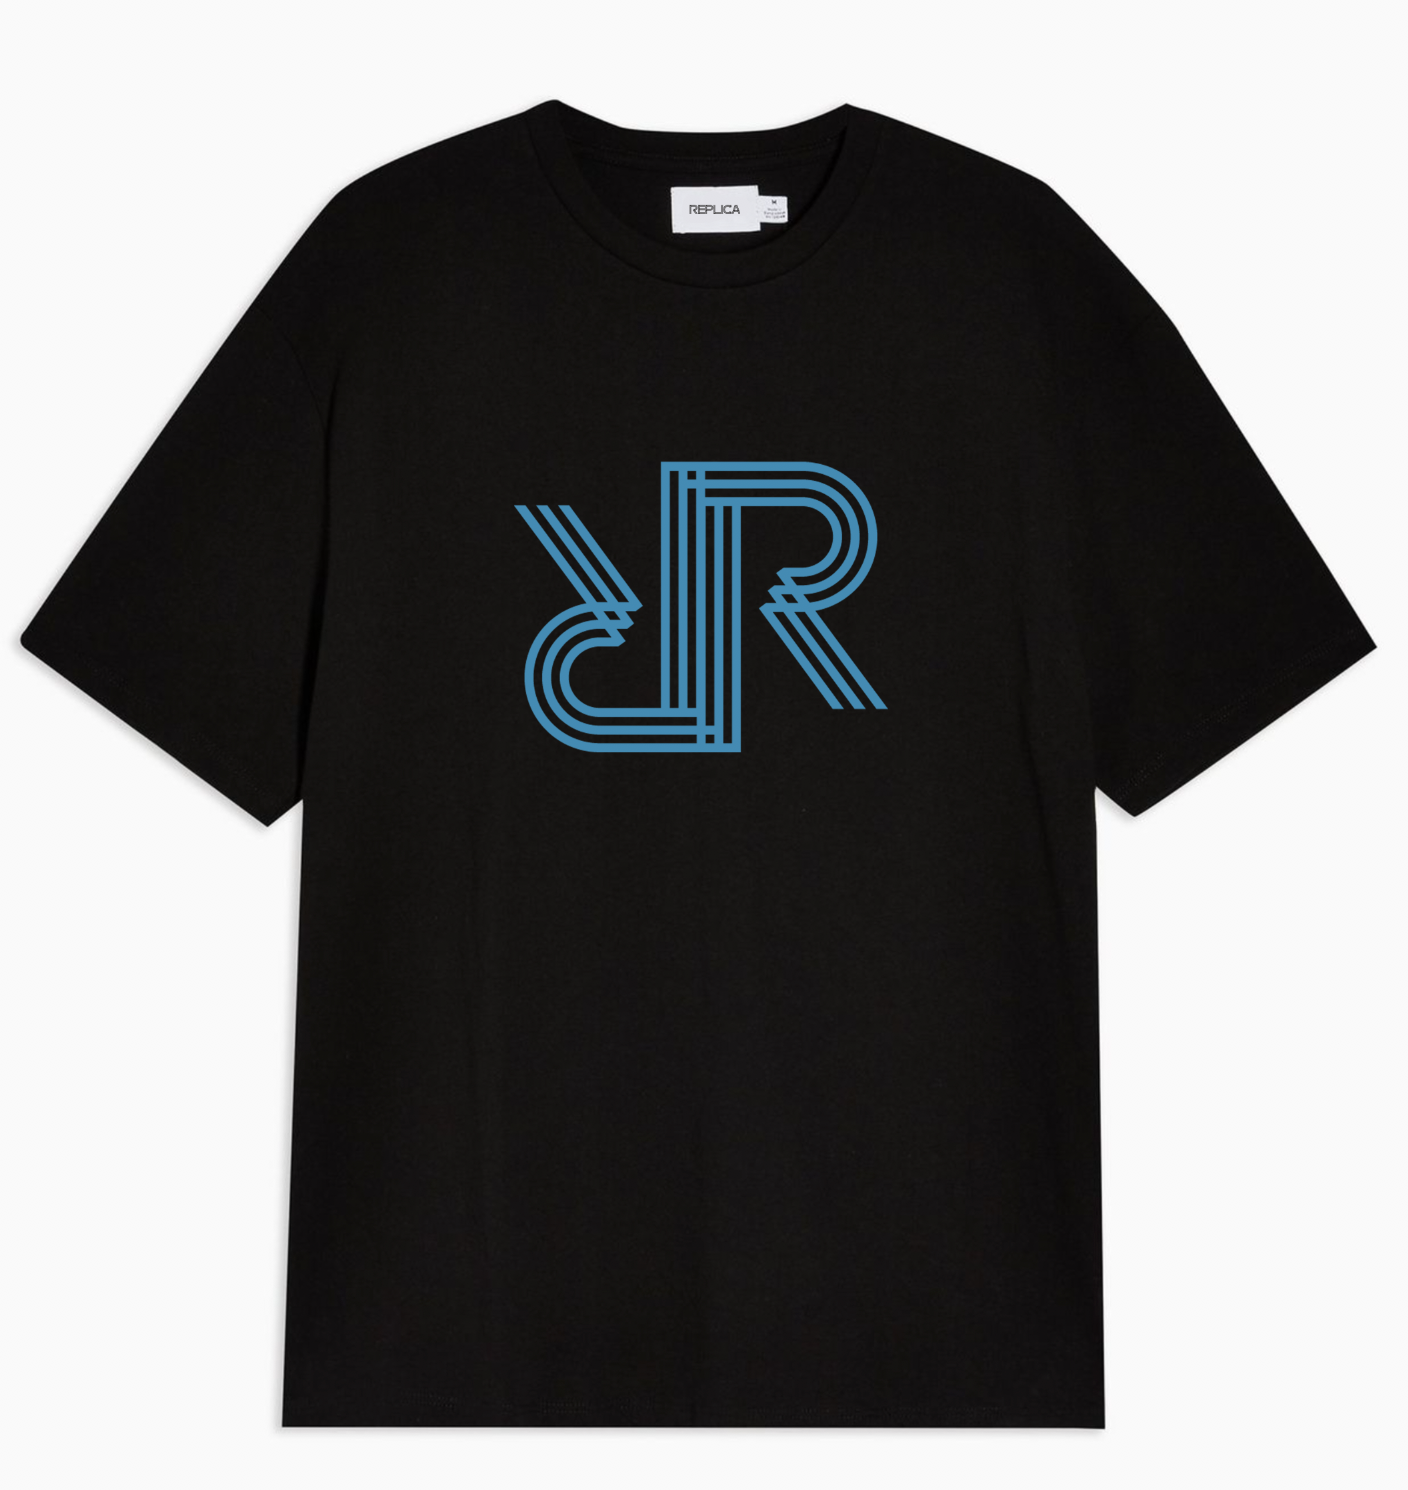 Replica RR monogram T-shirt